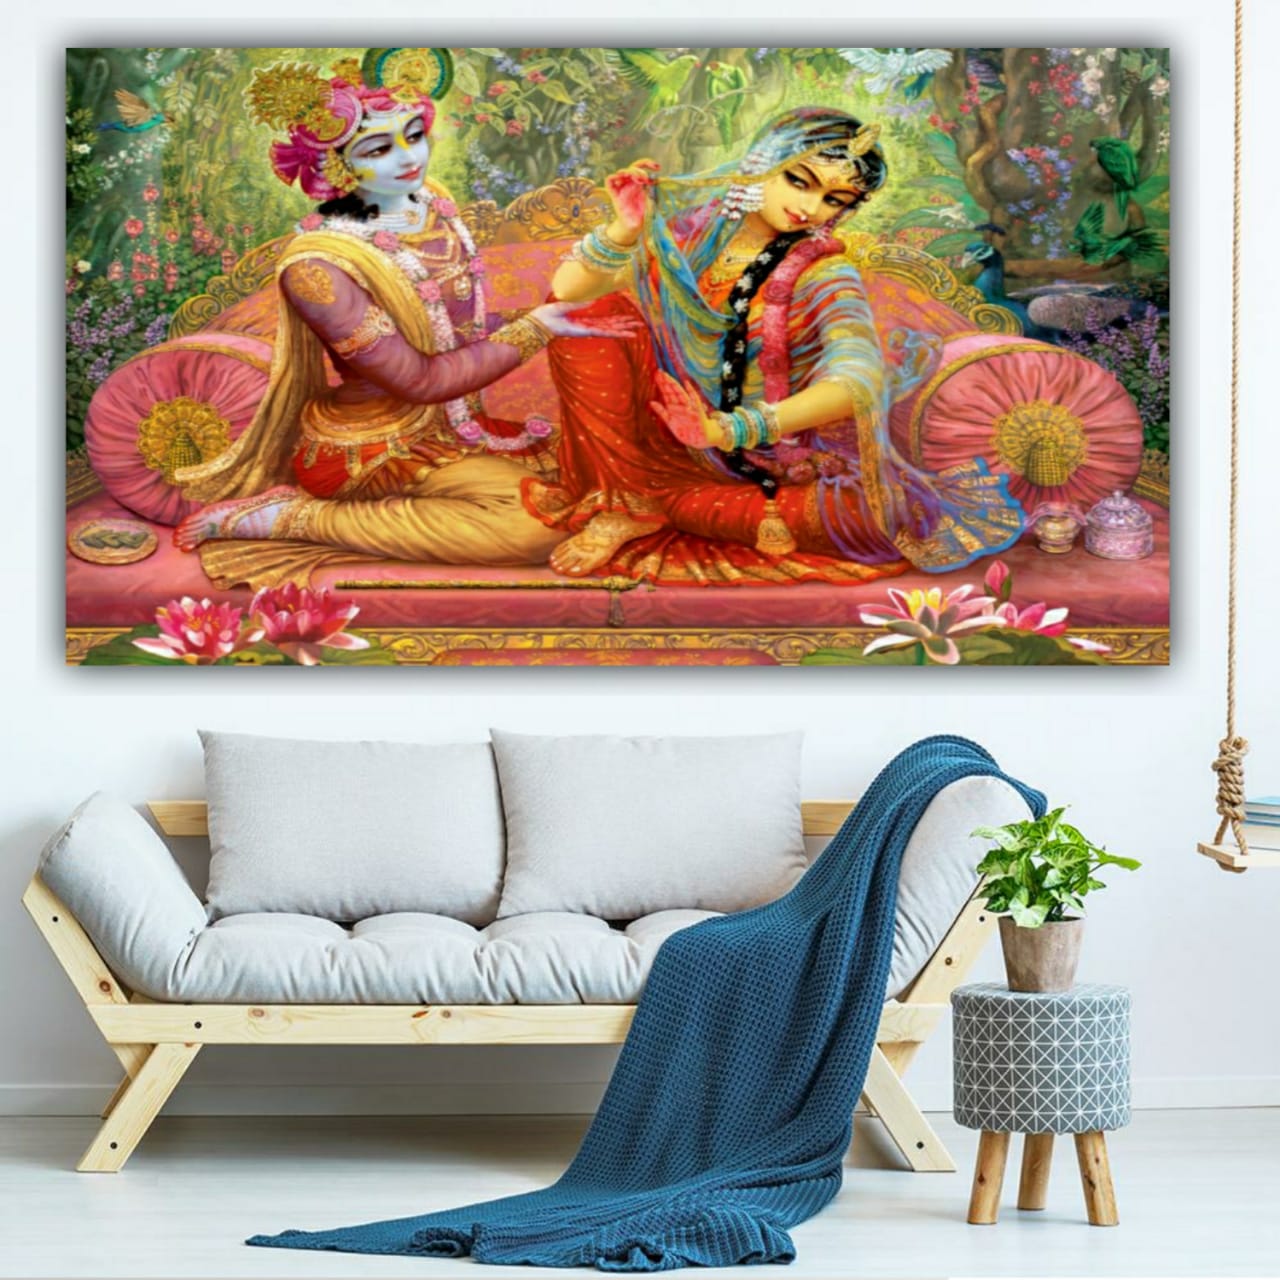 Radha krishna wall painting frame for living room wall decor